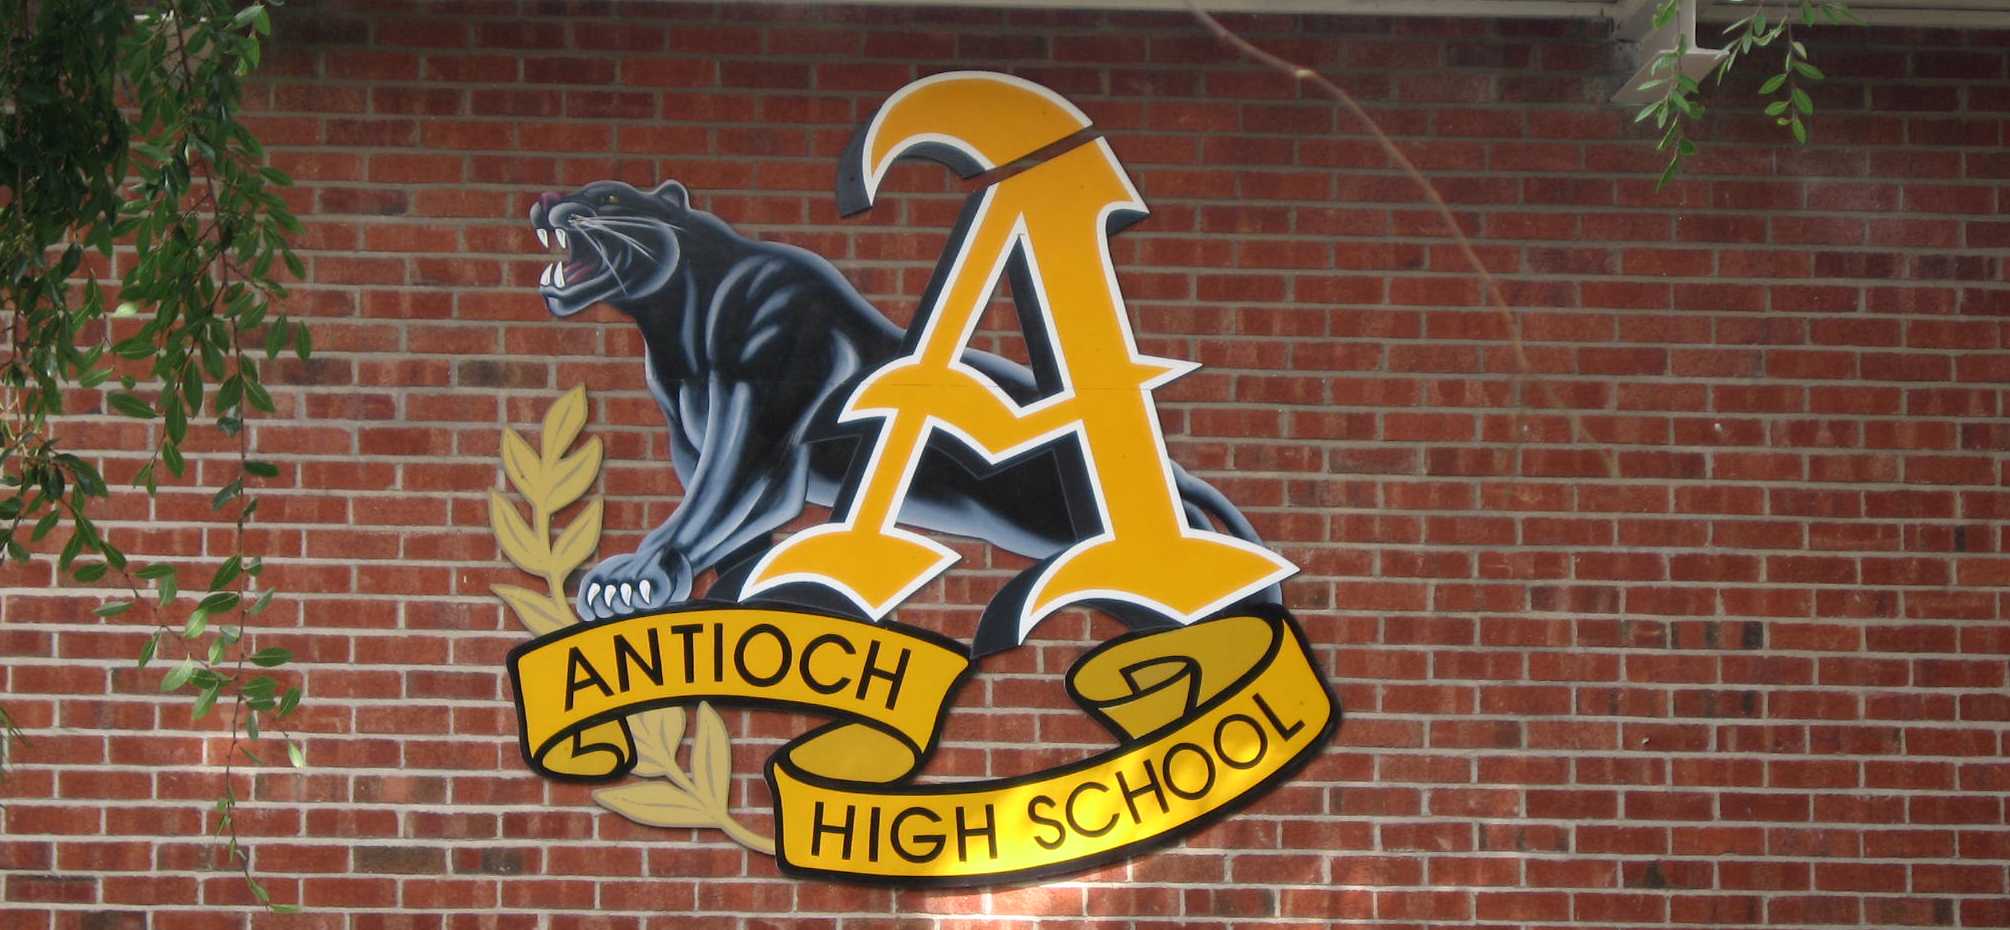 Antioch High School